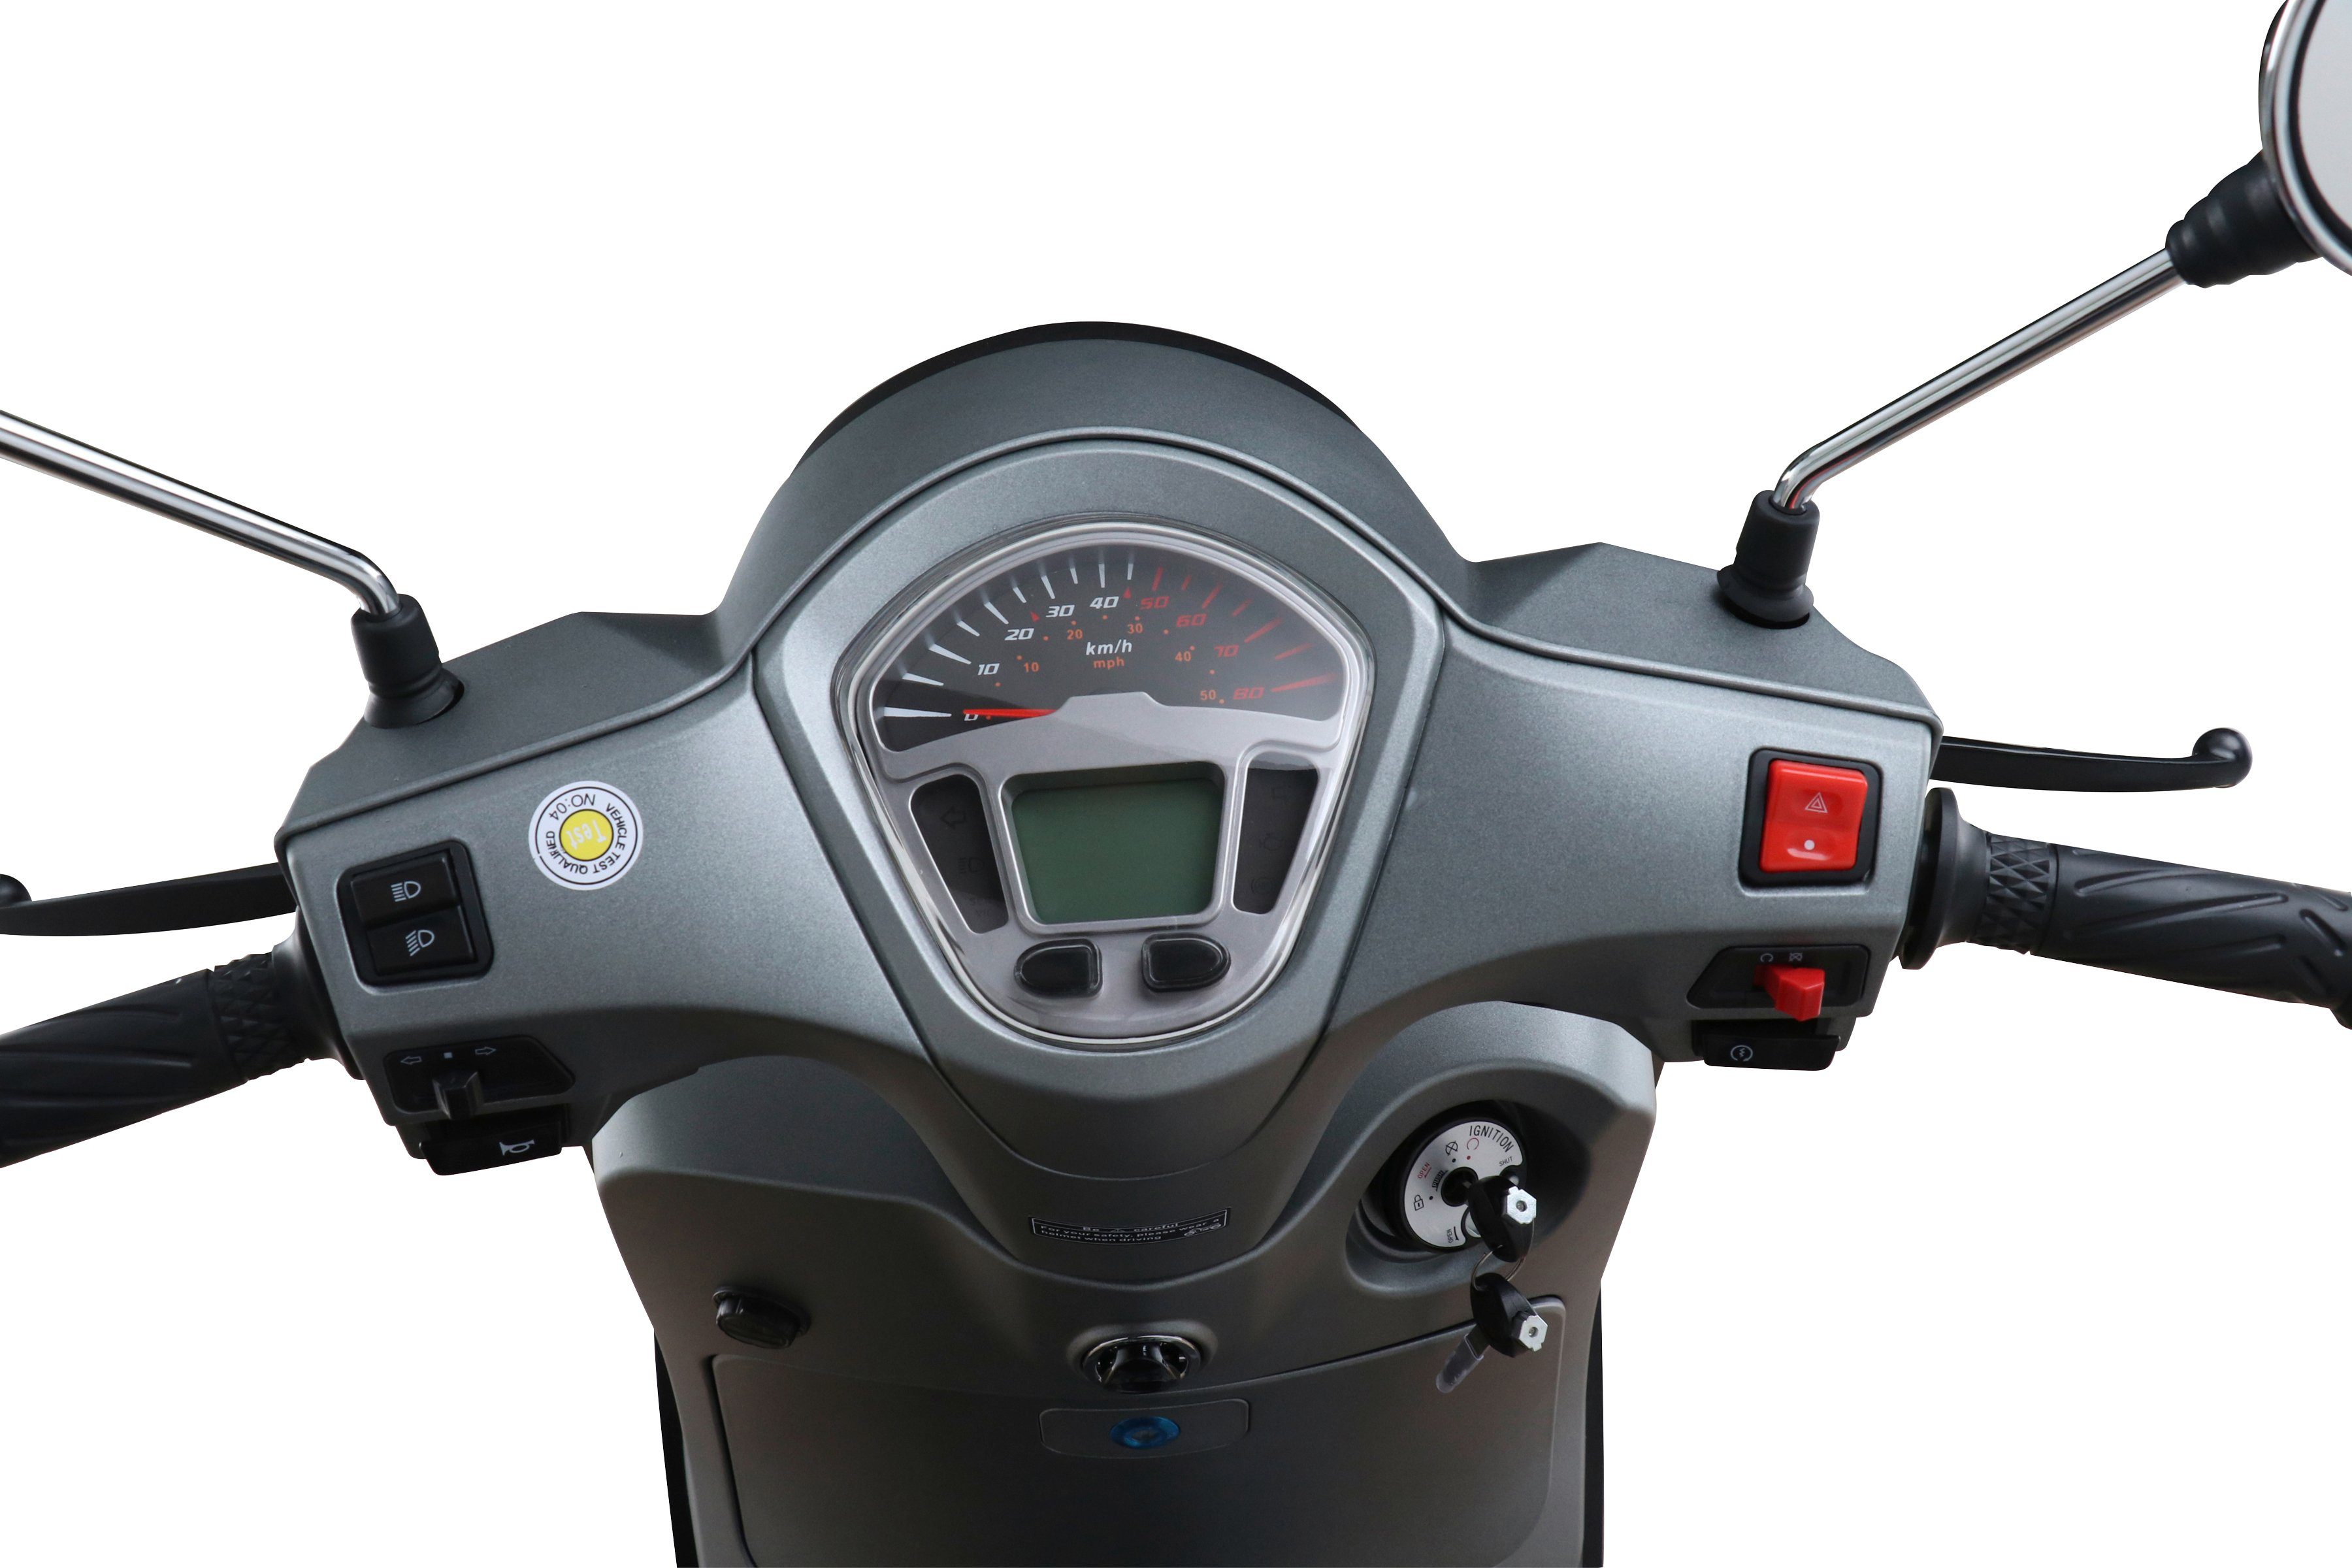 Alpha Motors Euro km/h, 50 45 Vita, ccm, Motorroller 5